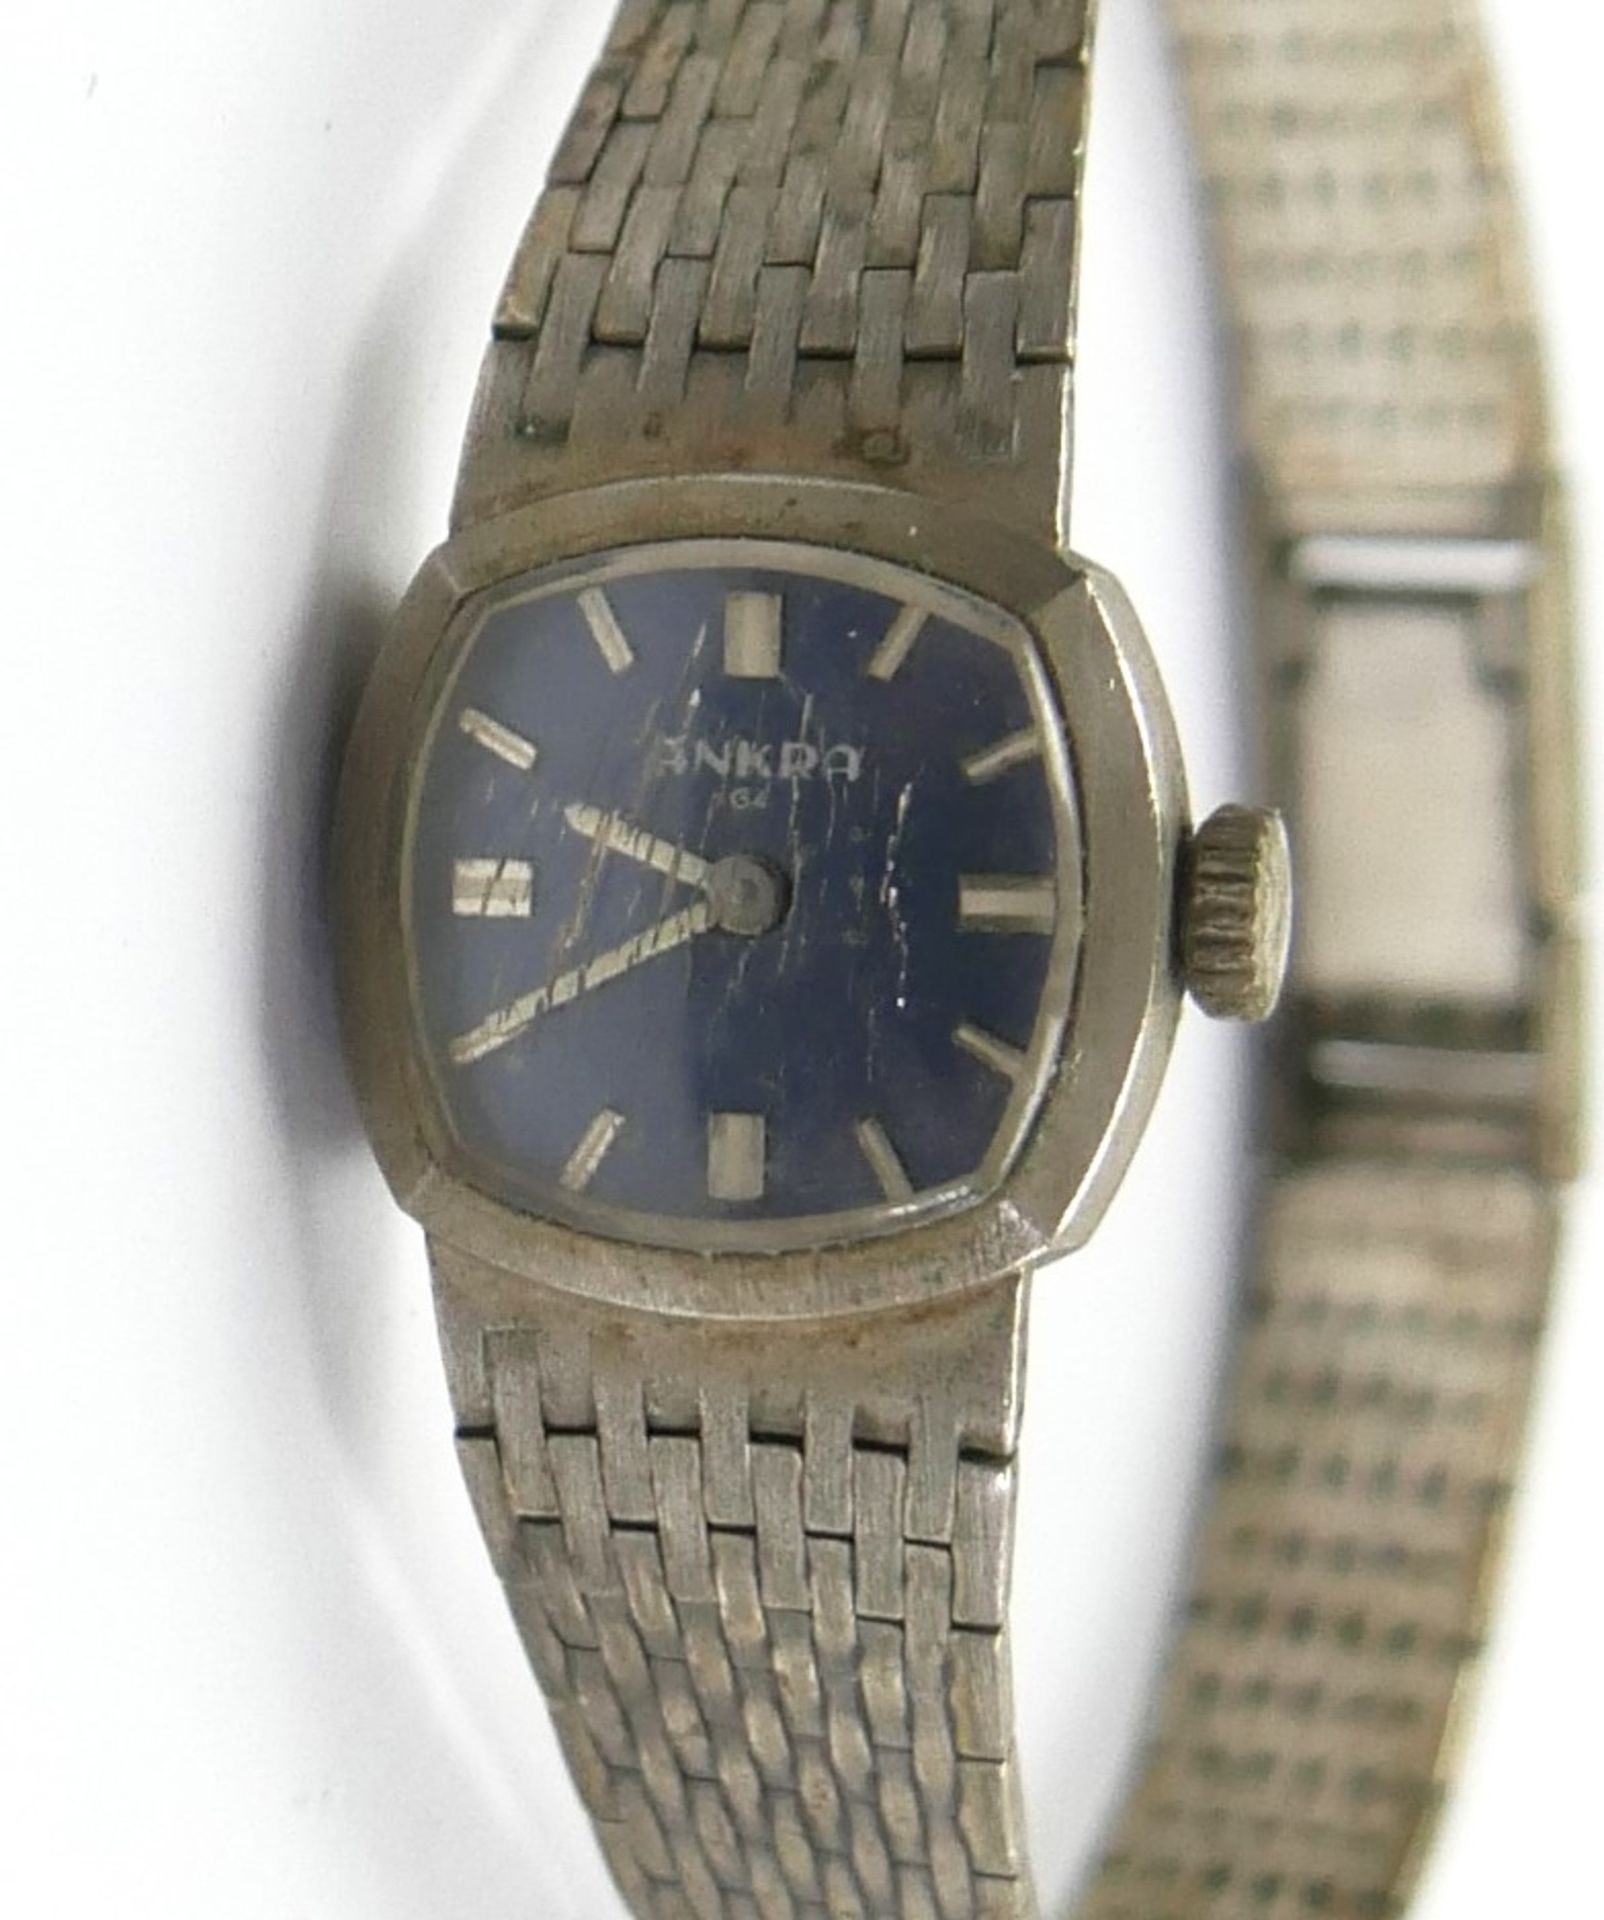 Damen Armbanduhr ANKRA, 835er Silber. Mechanisch, Funktion geprüft - Image 2 of 2